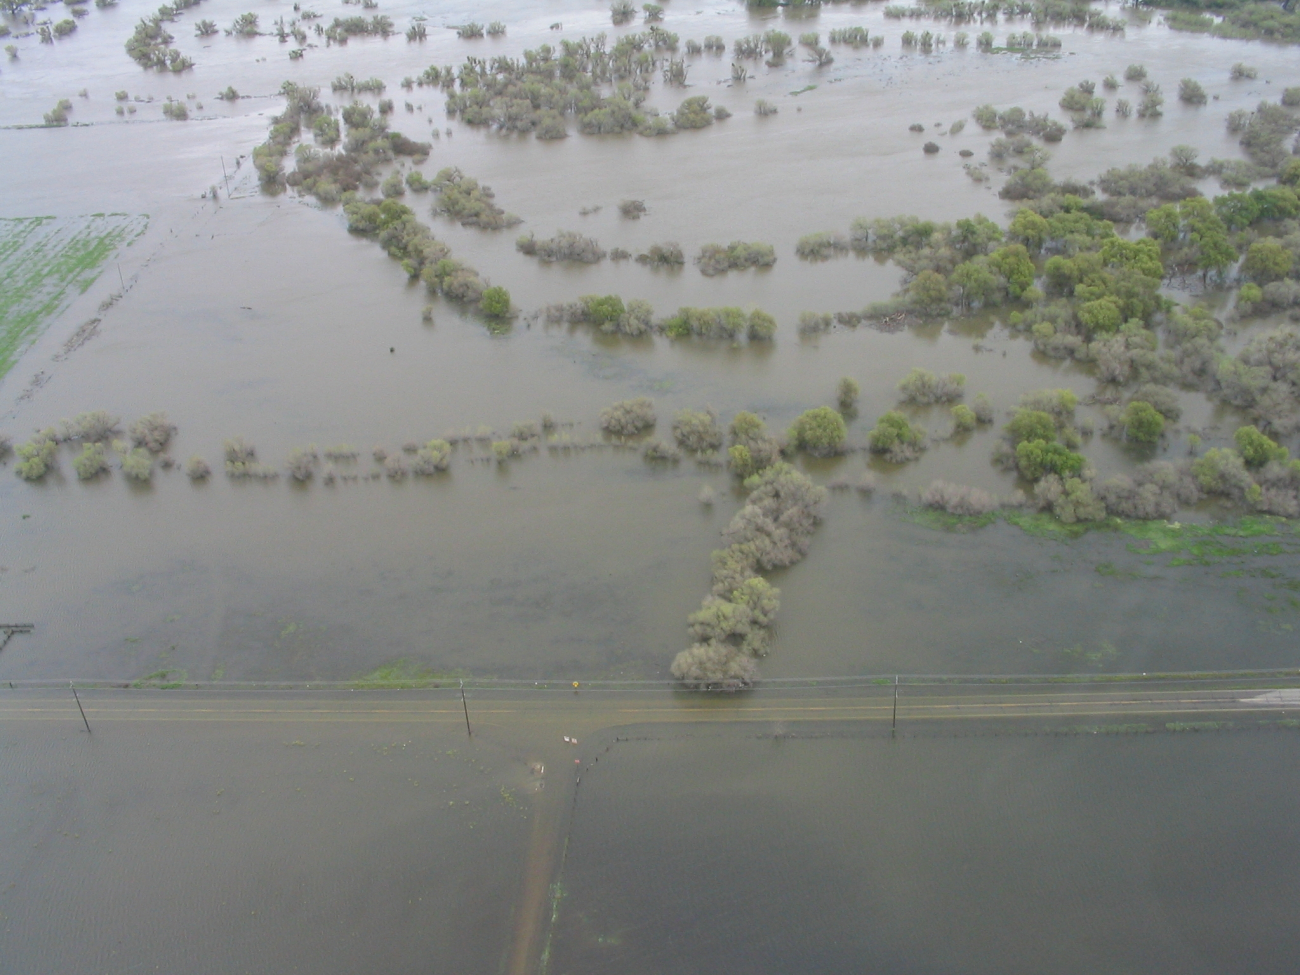 Flooding of farmlands along the San Joaquin River